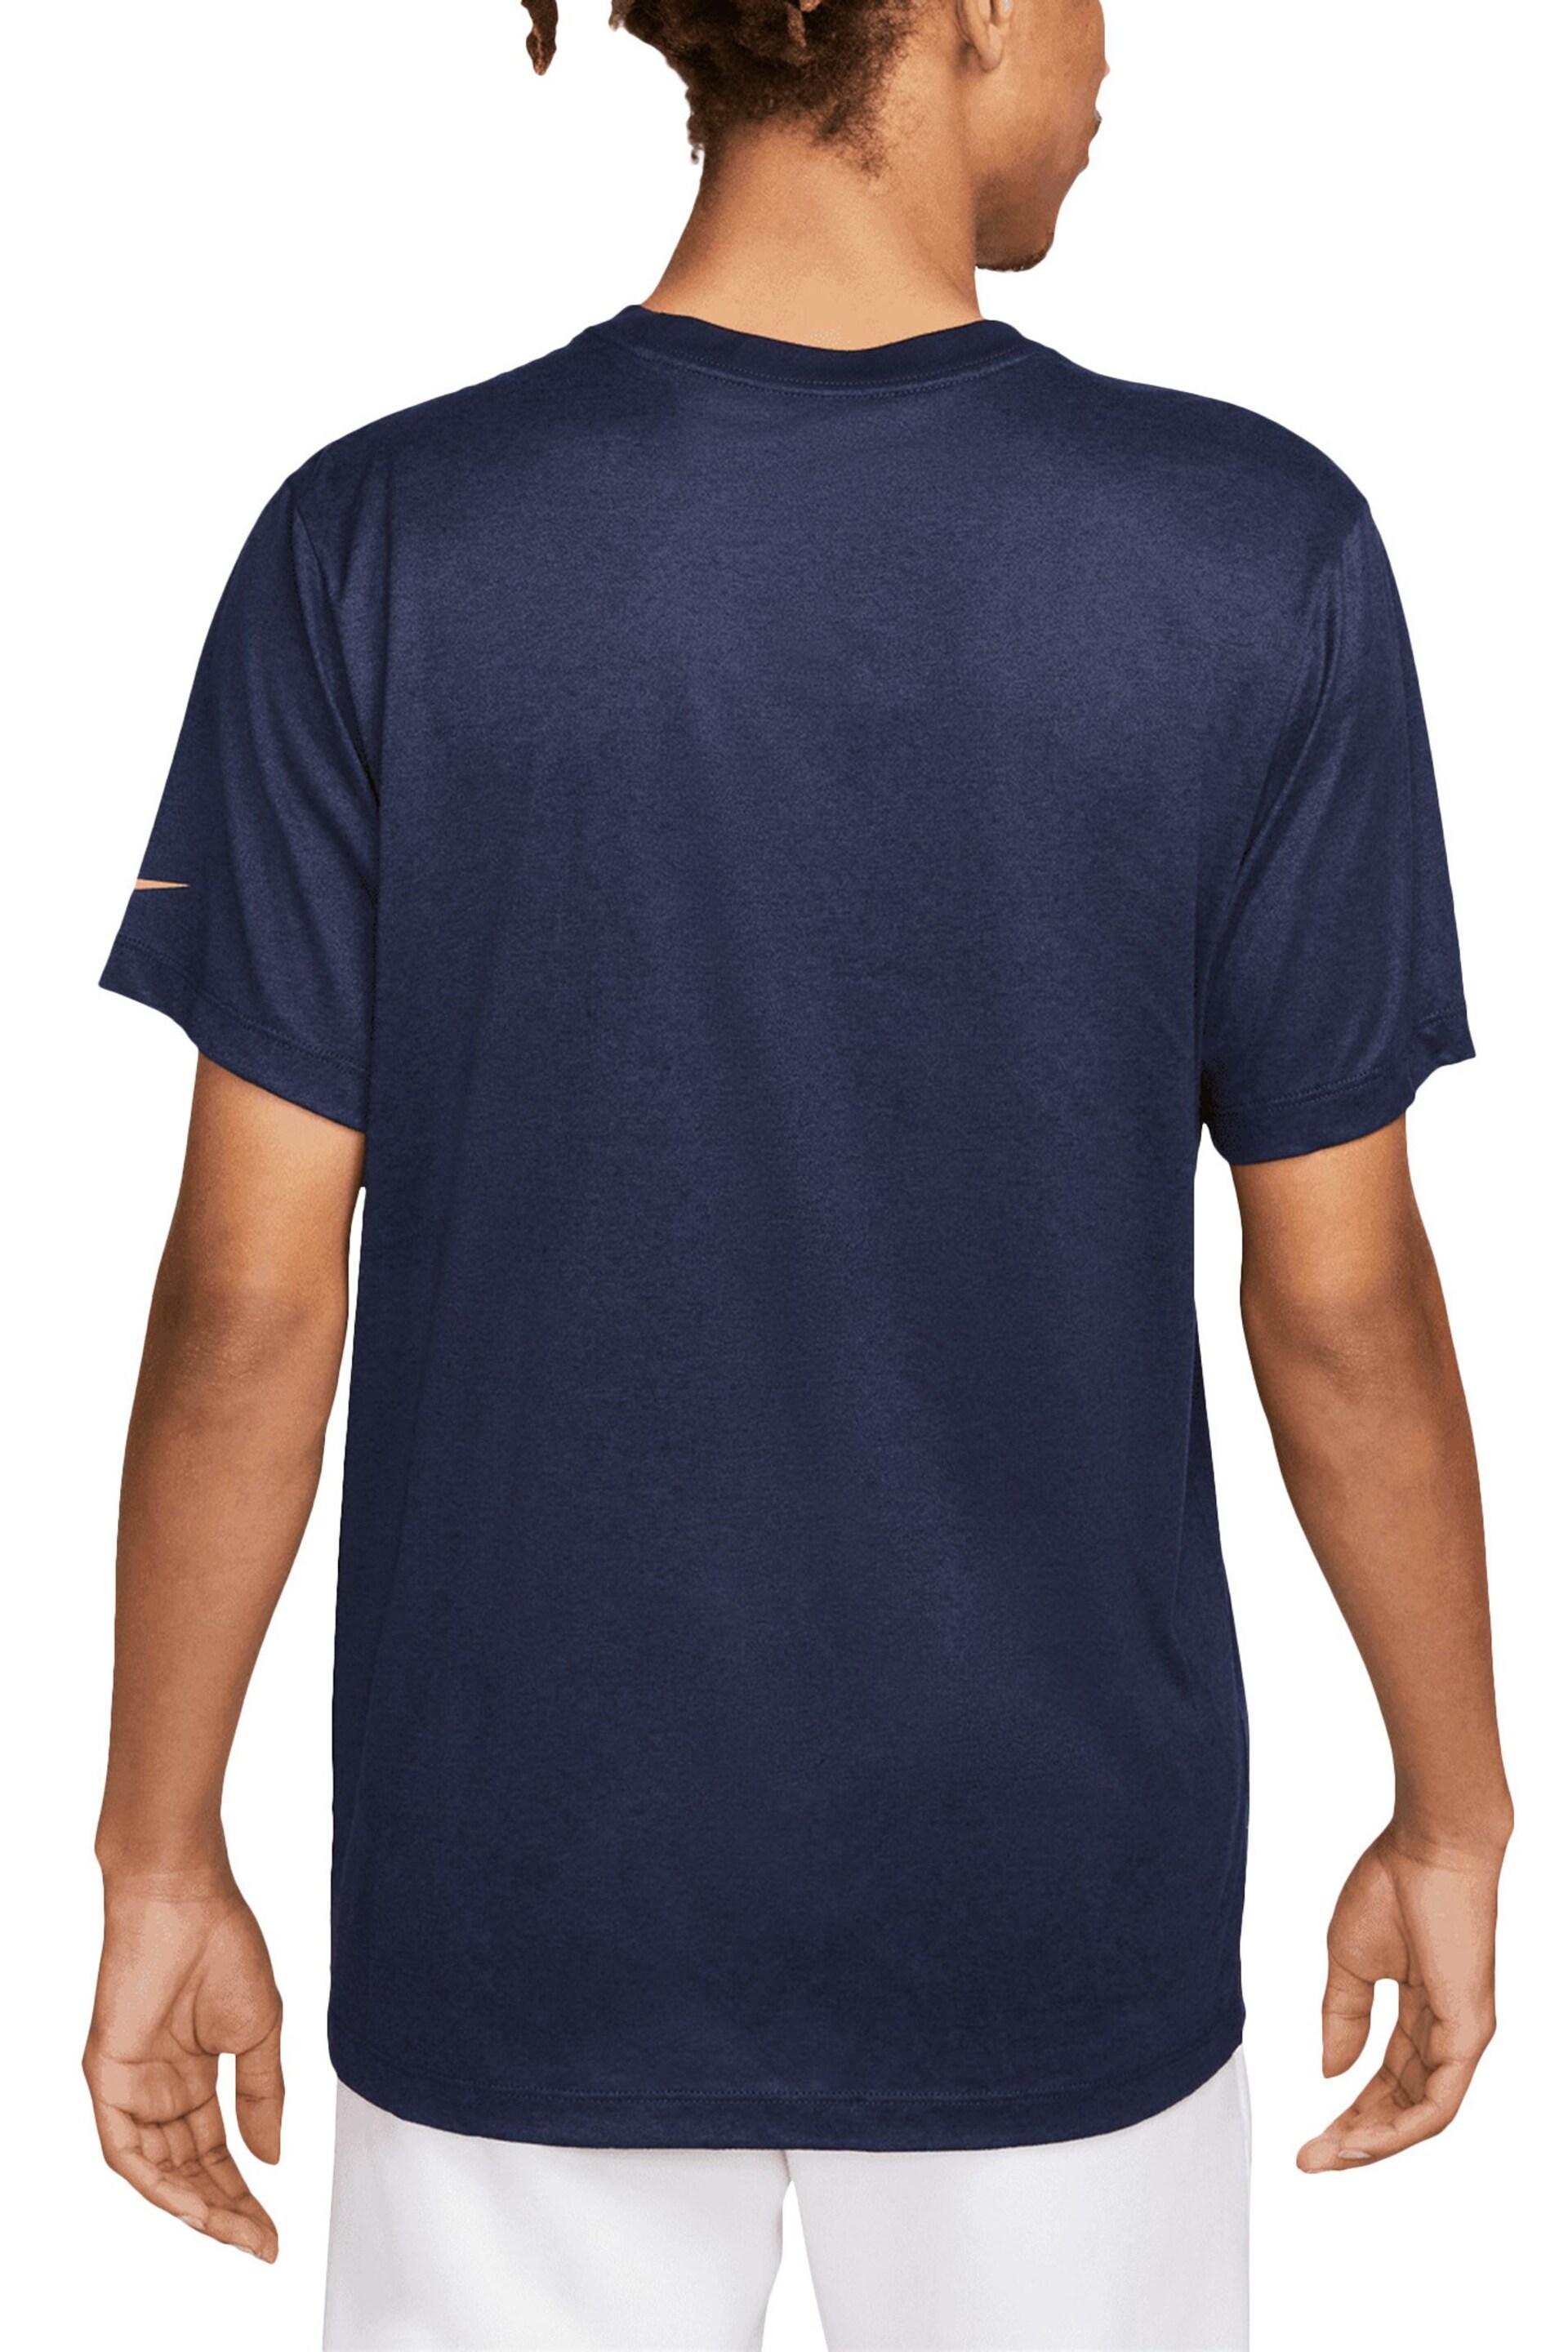 Nike Blue Chelsea Repeat T-Shirt - Image 2 of 2